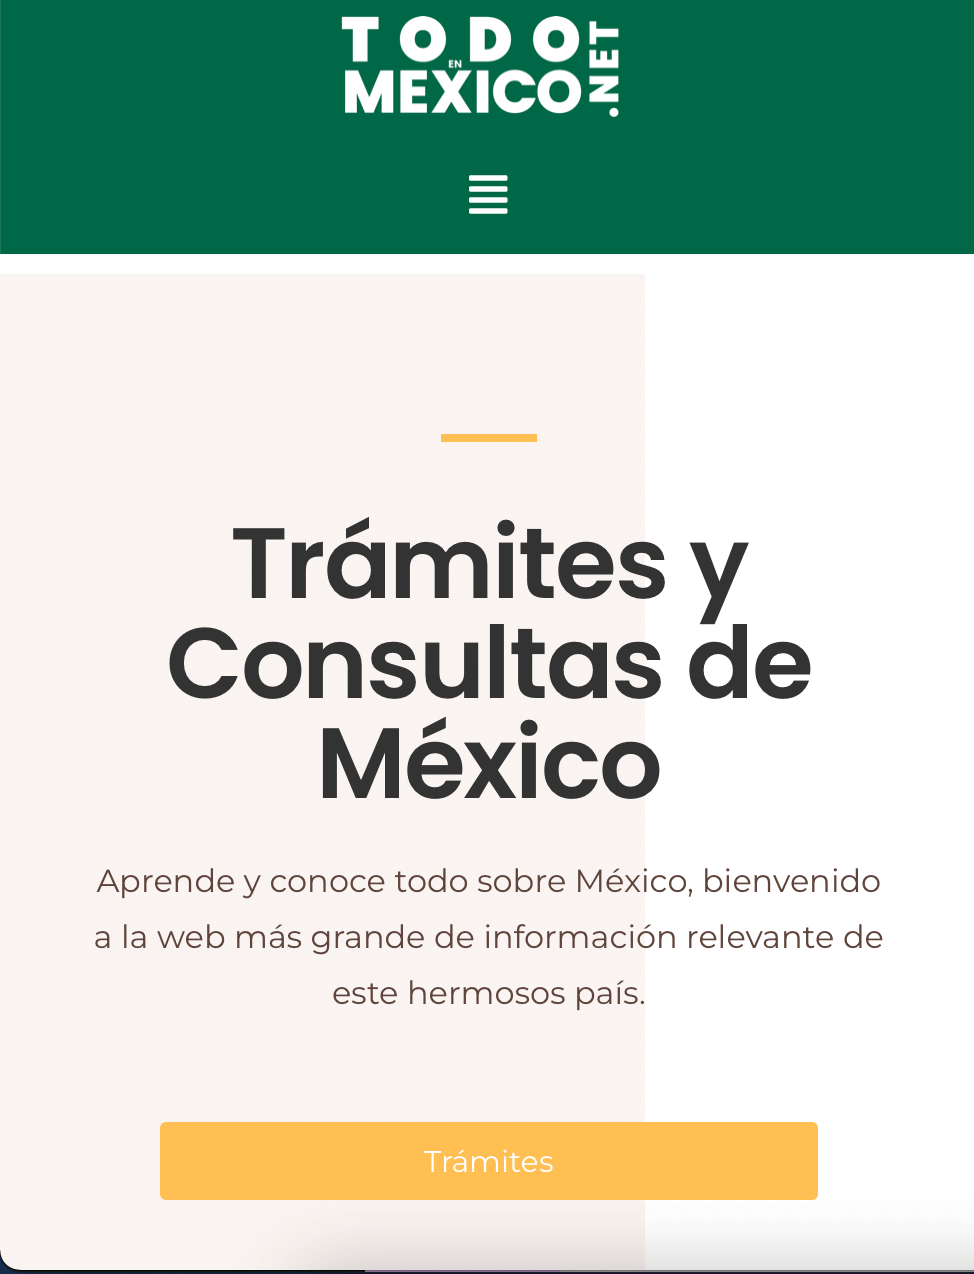 Todo En Mexico Web